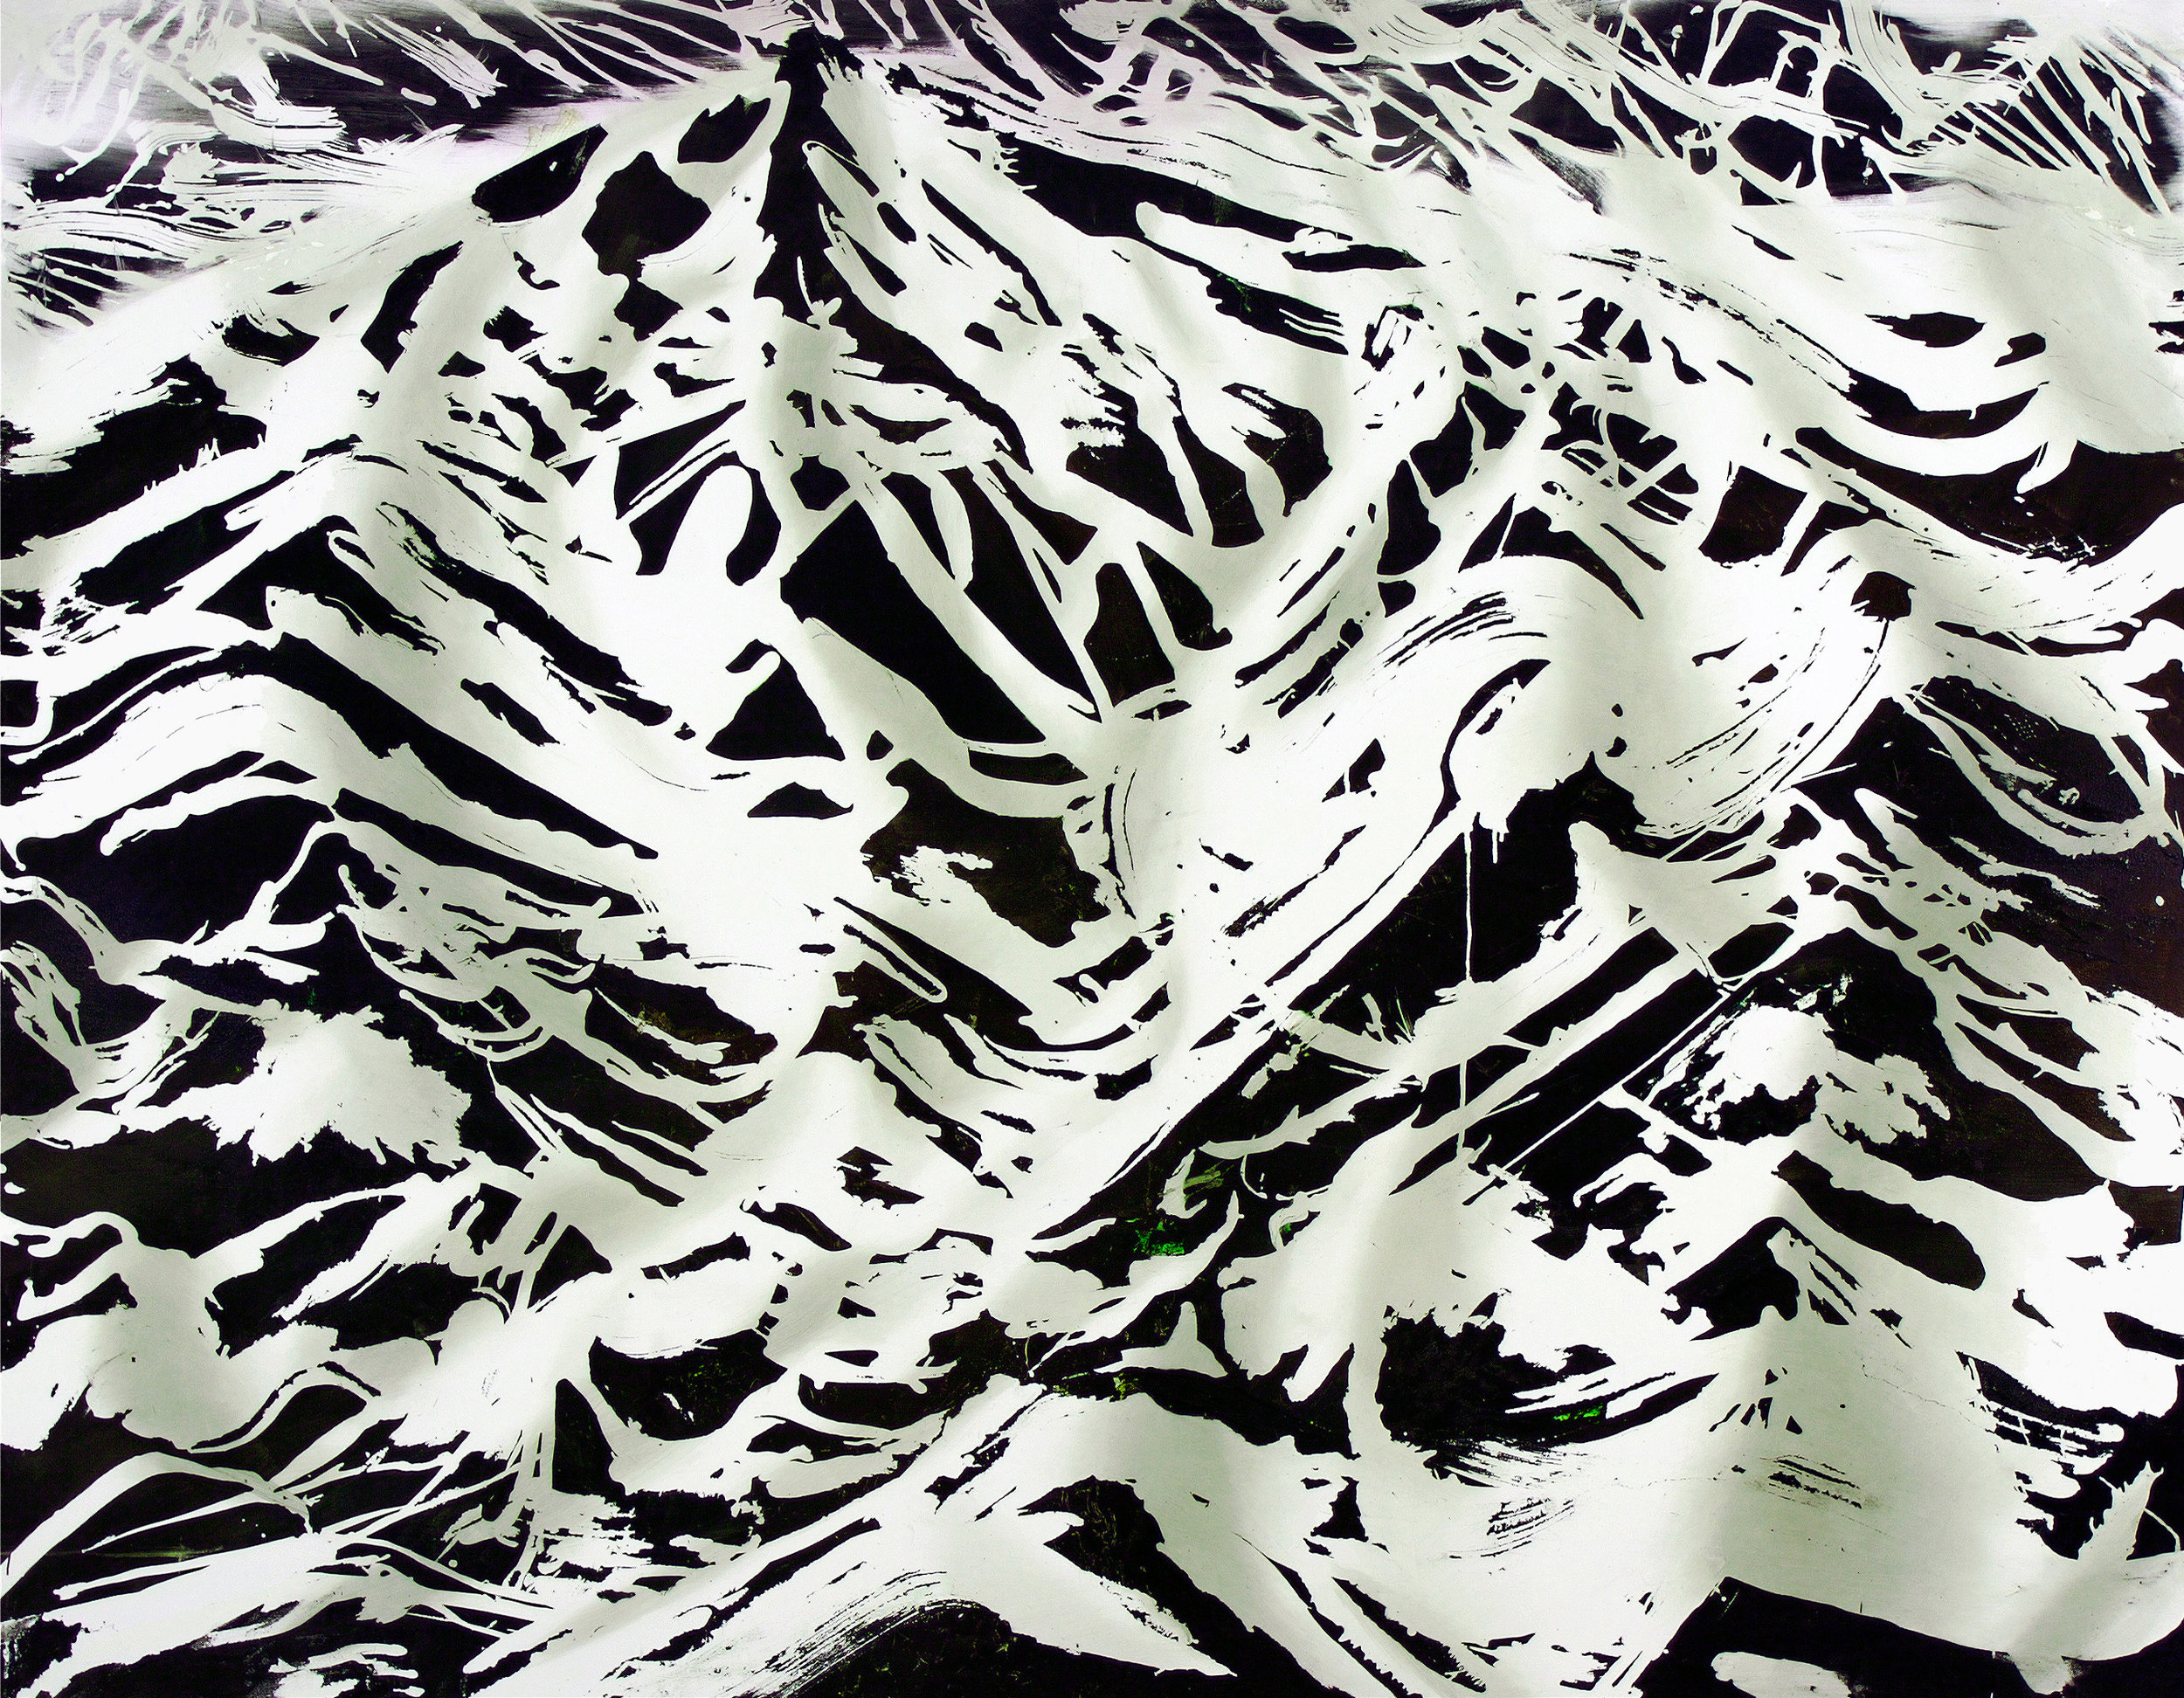   Peri-Antarctic 3 , 2007, oil on canvas, 84 x 108 inches 